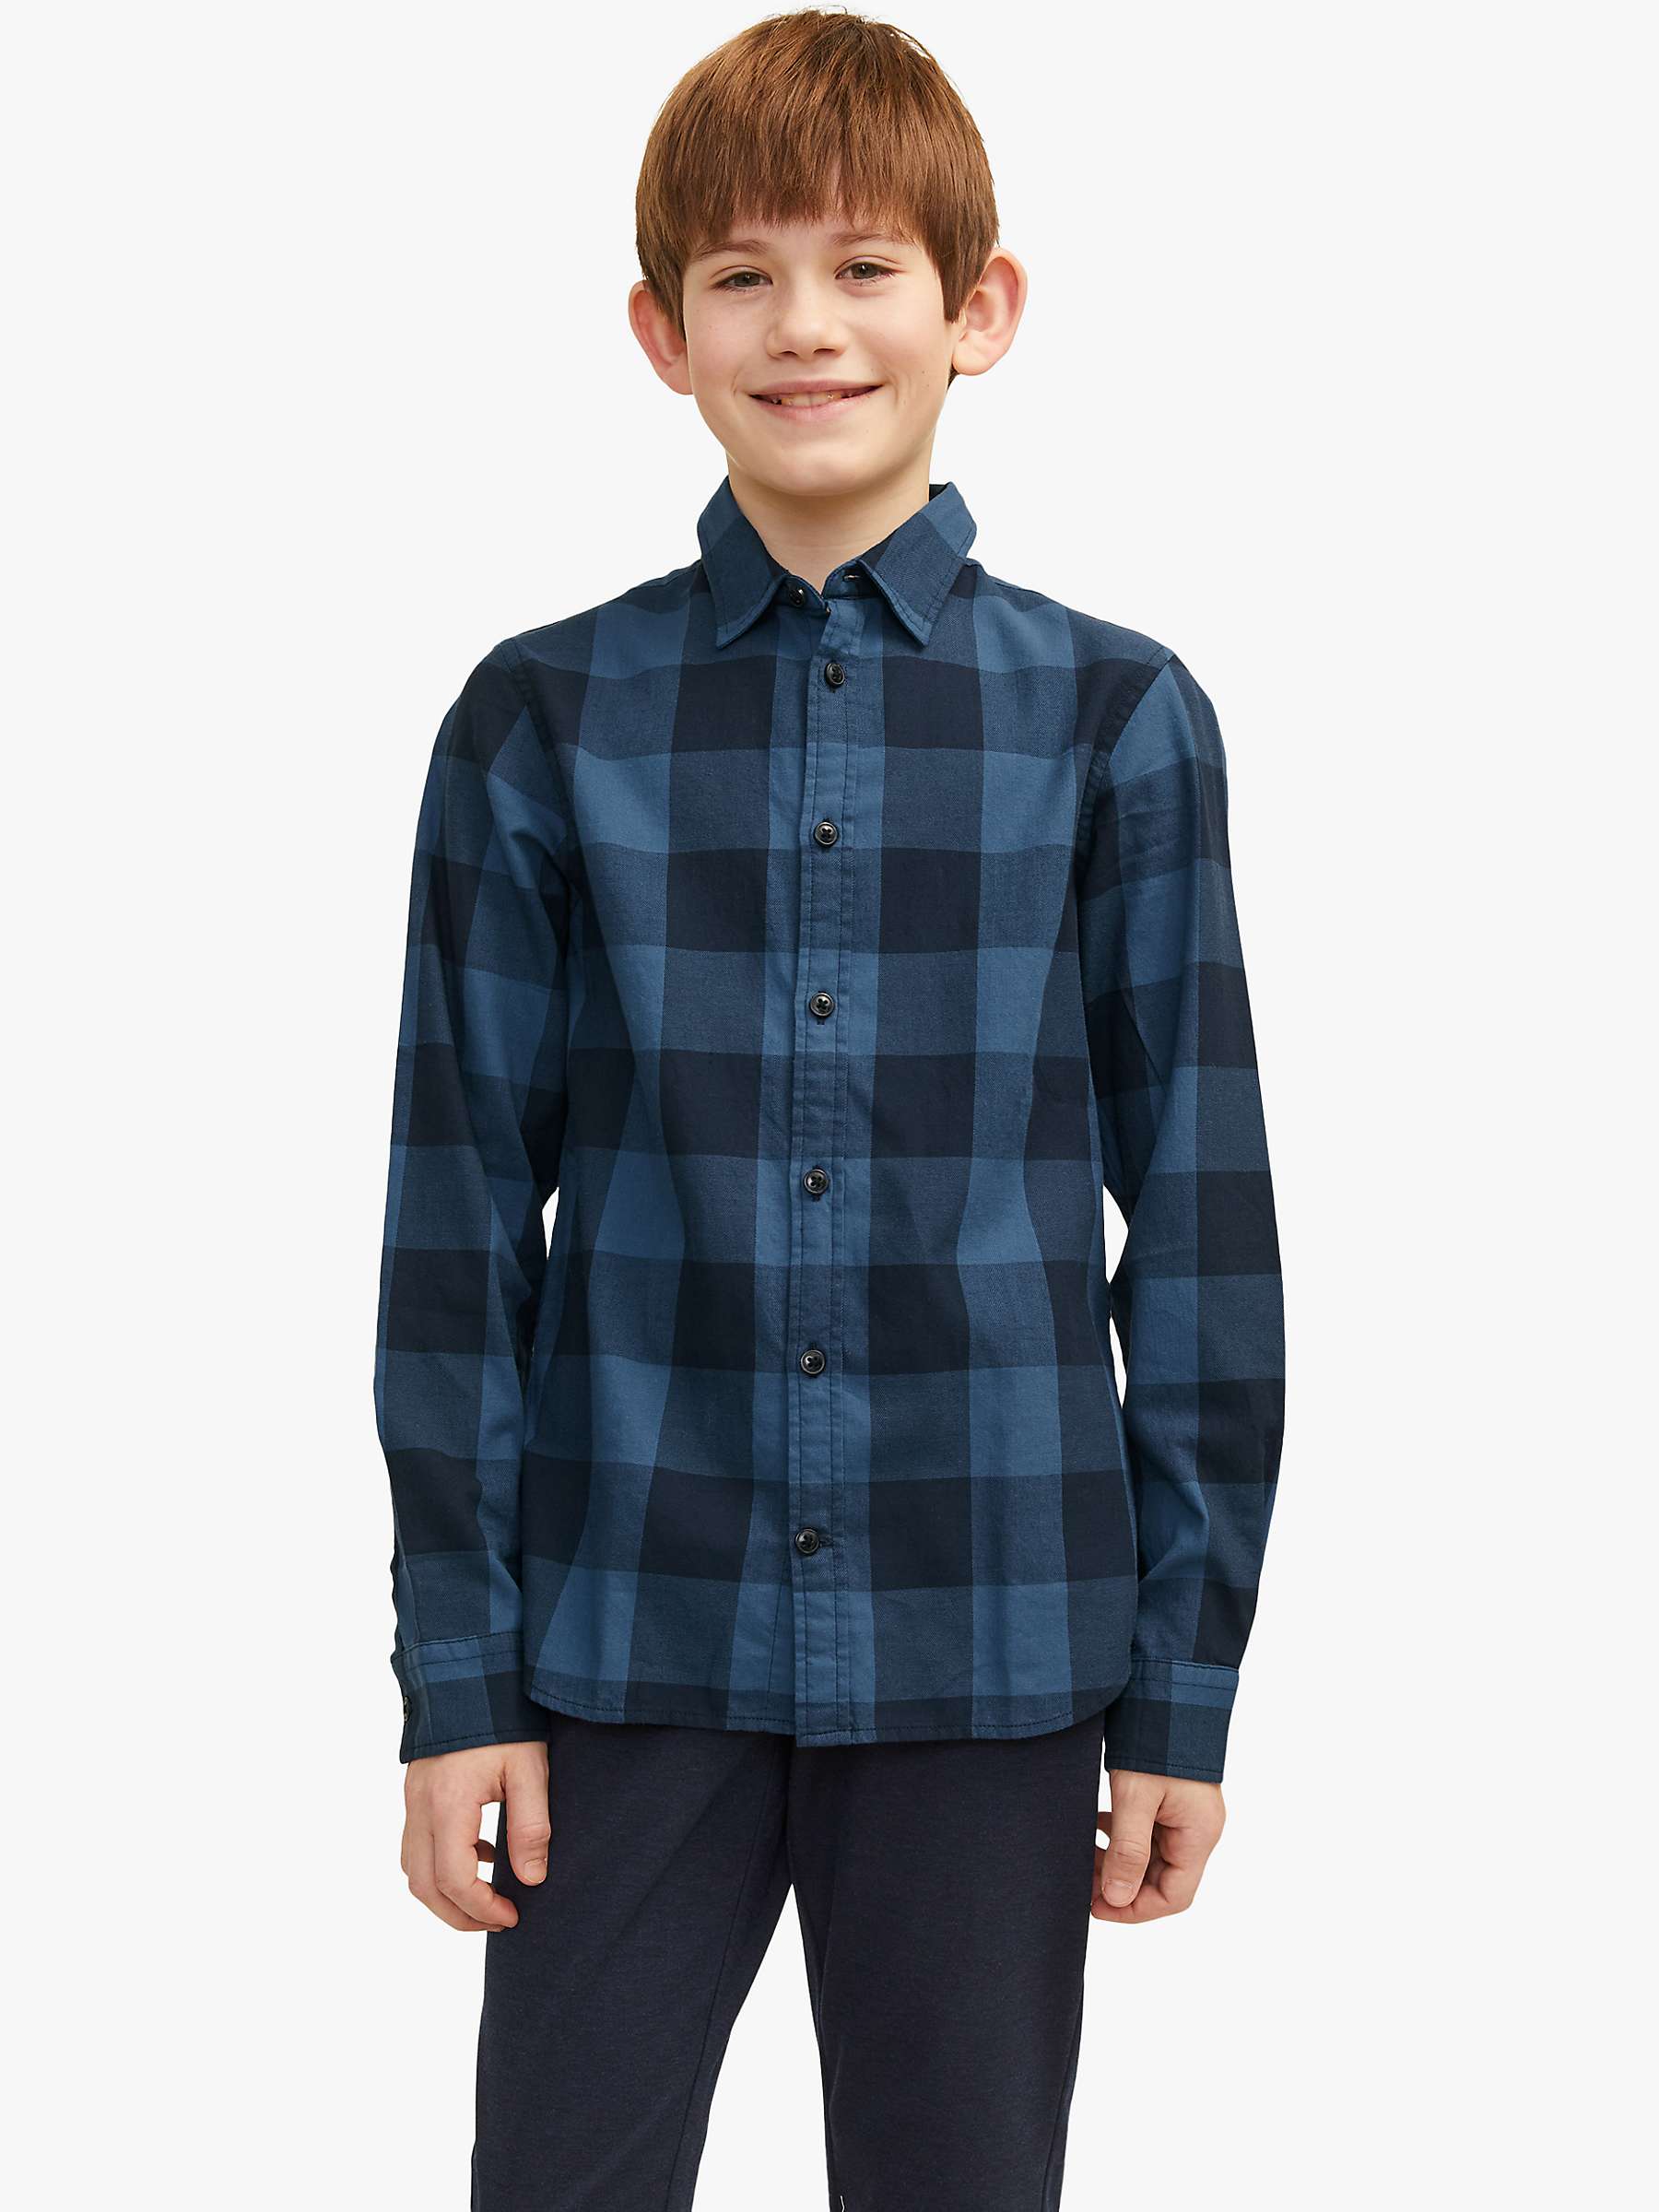 Buy Jack & Jones Kids' Cotton Gingham Long Sleeve Shirt Online at johnlewis.com